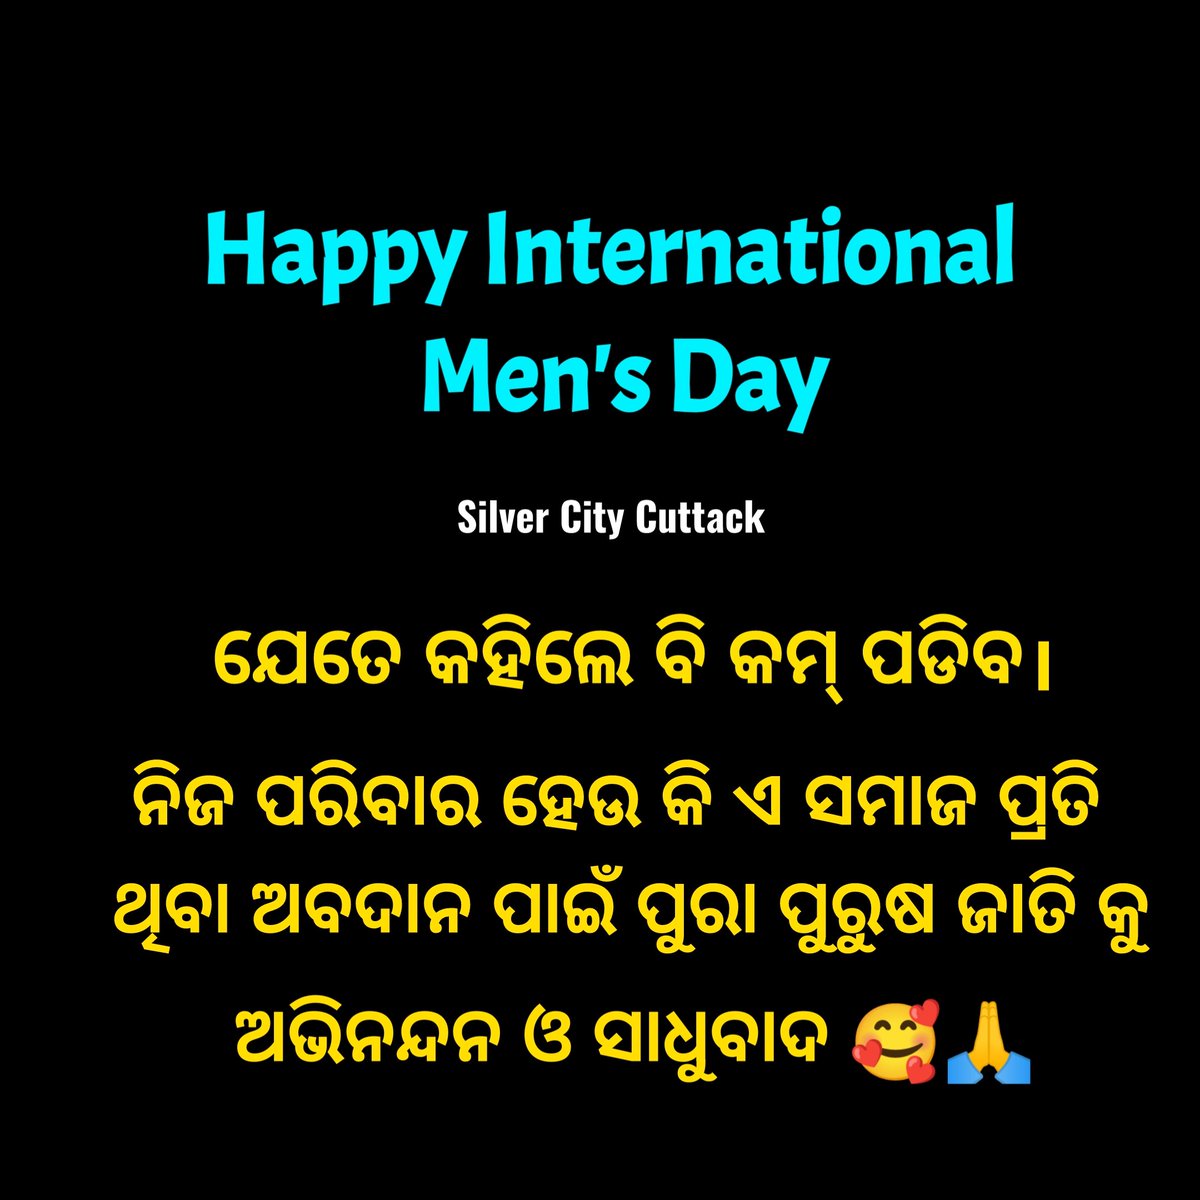 Happy International Men's Day ☺️ #internationalmensday #mensday #men #mensrights #mentoo #equality